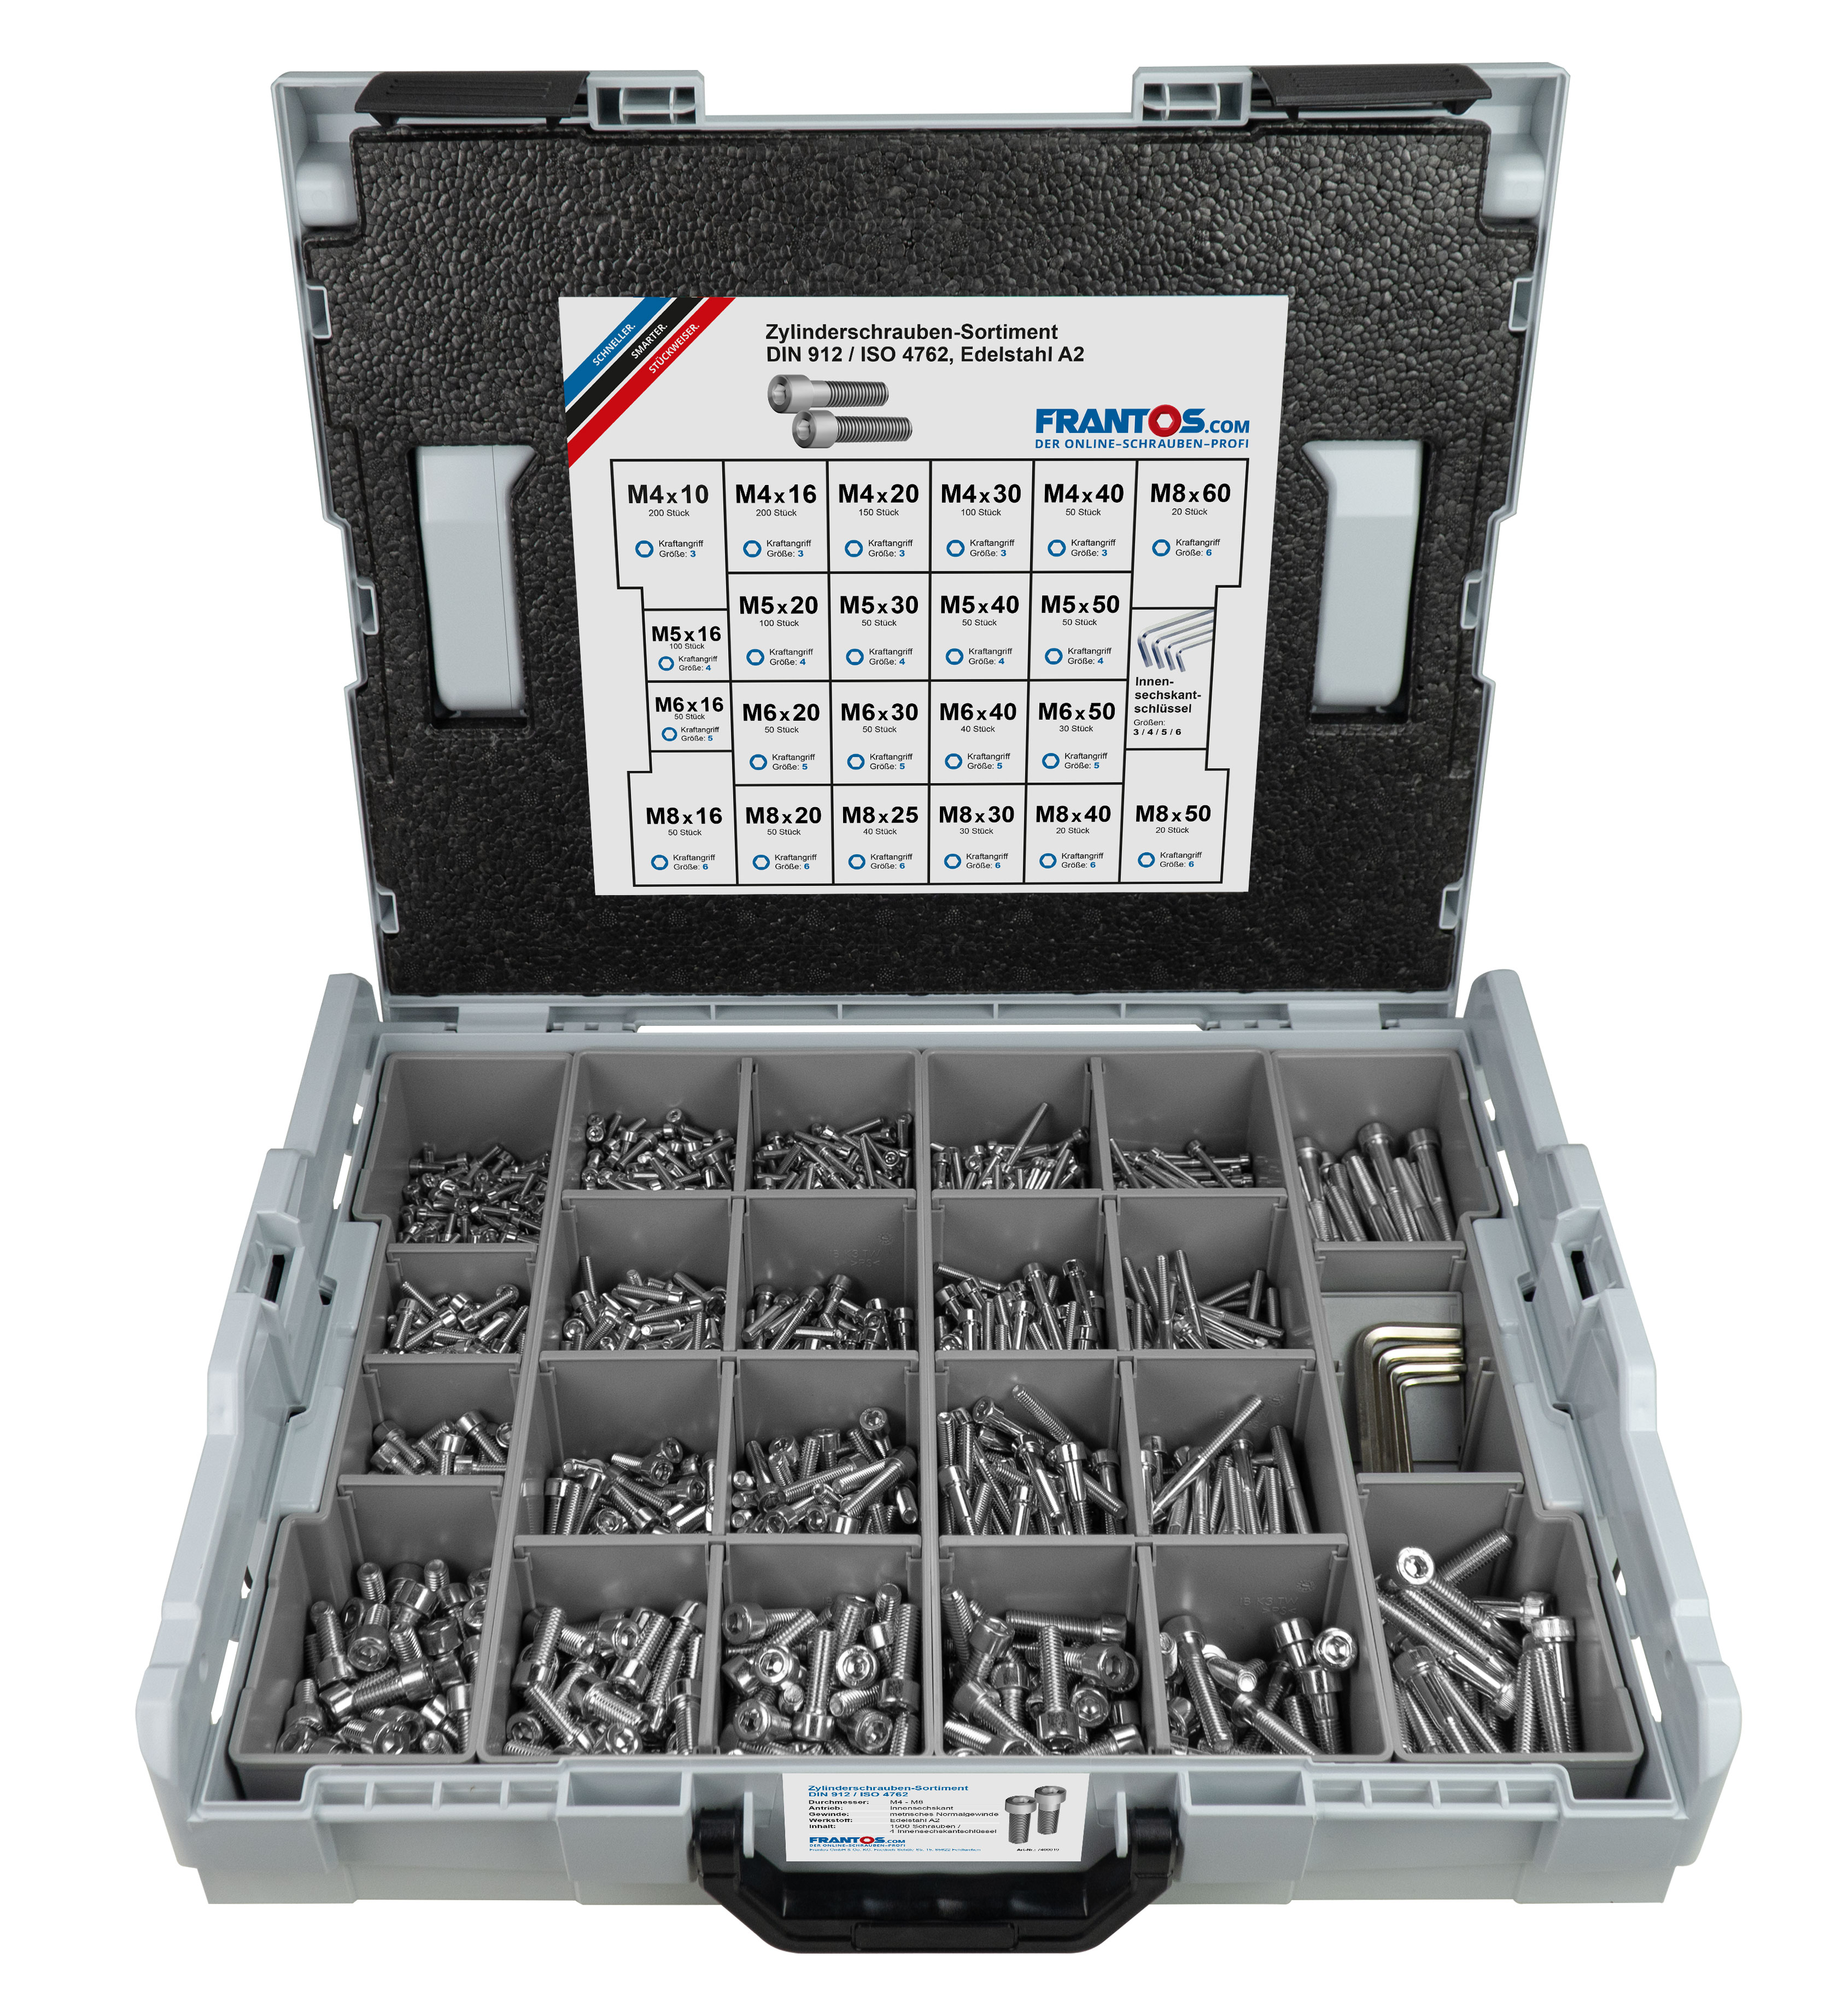 Frantos L-BOXX Sortiment, DIN 912 / ISO 4762 Zylinderschrauben, Edelstahl  A2, inkl. Inbusschlüssel, 1504 Teile